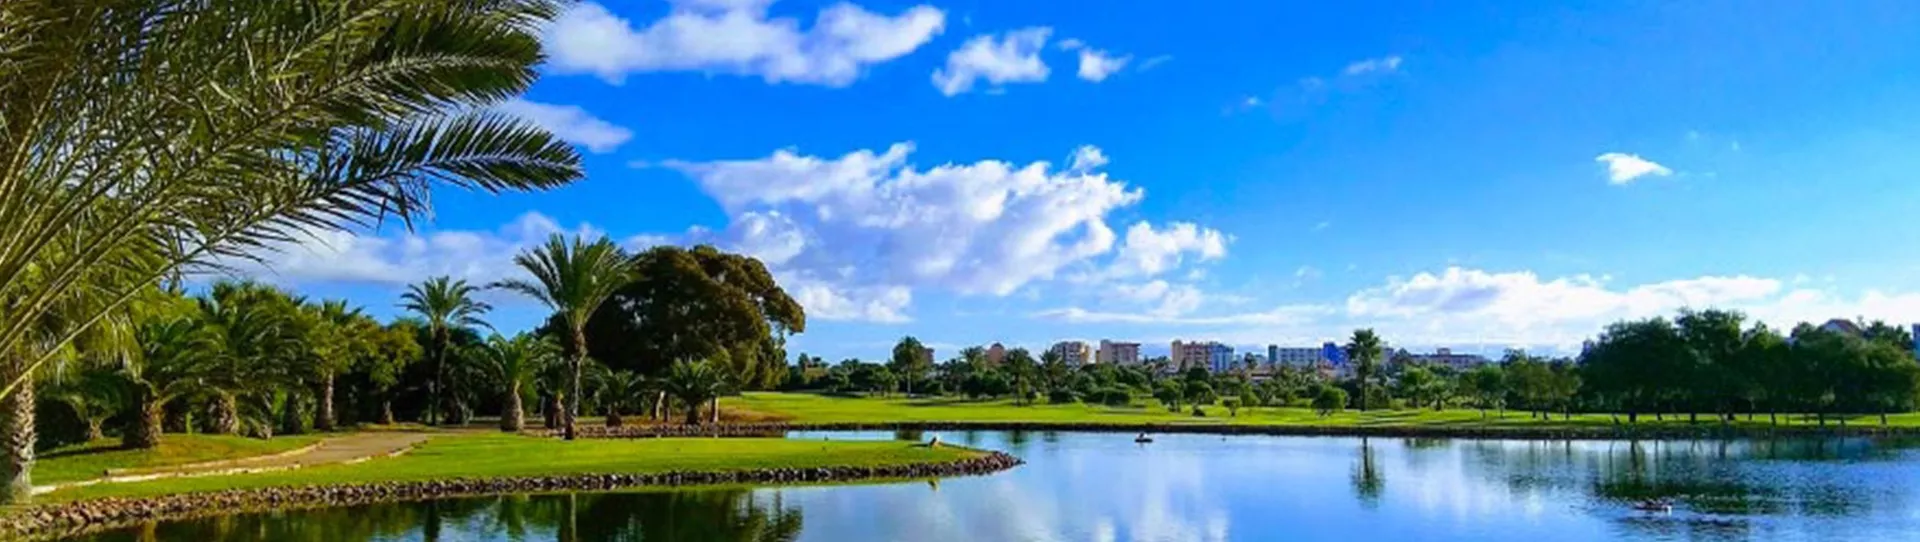 Spain golf courses - Club de Golf Playa Serena - Photo 1